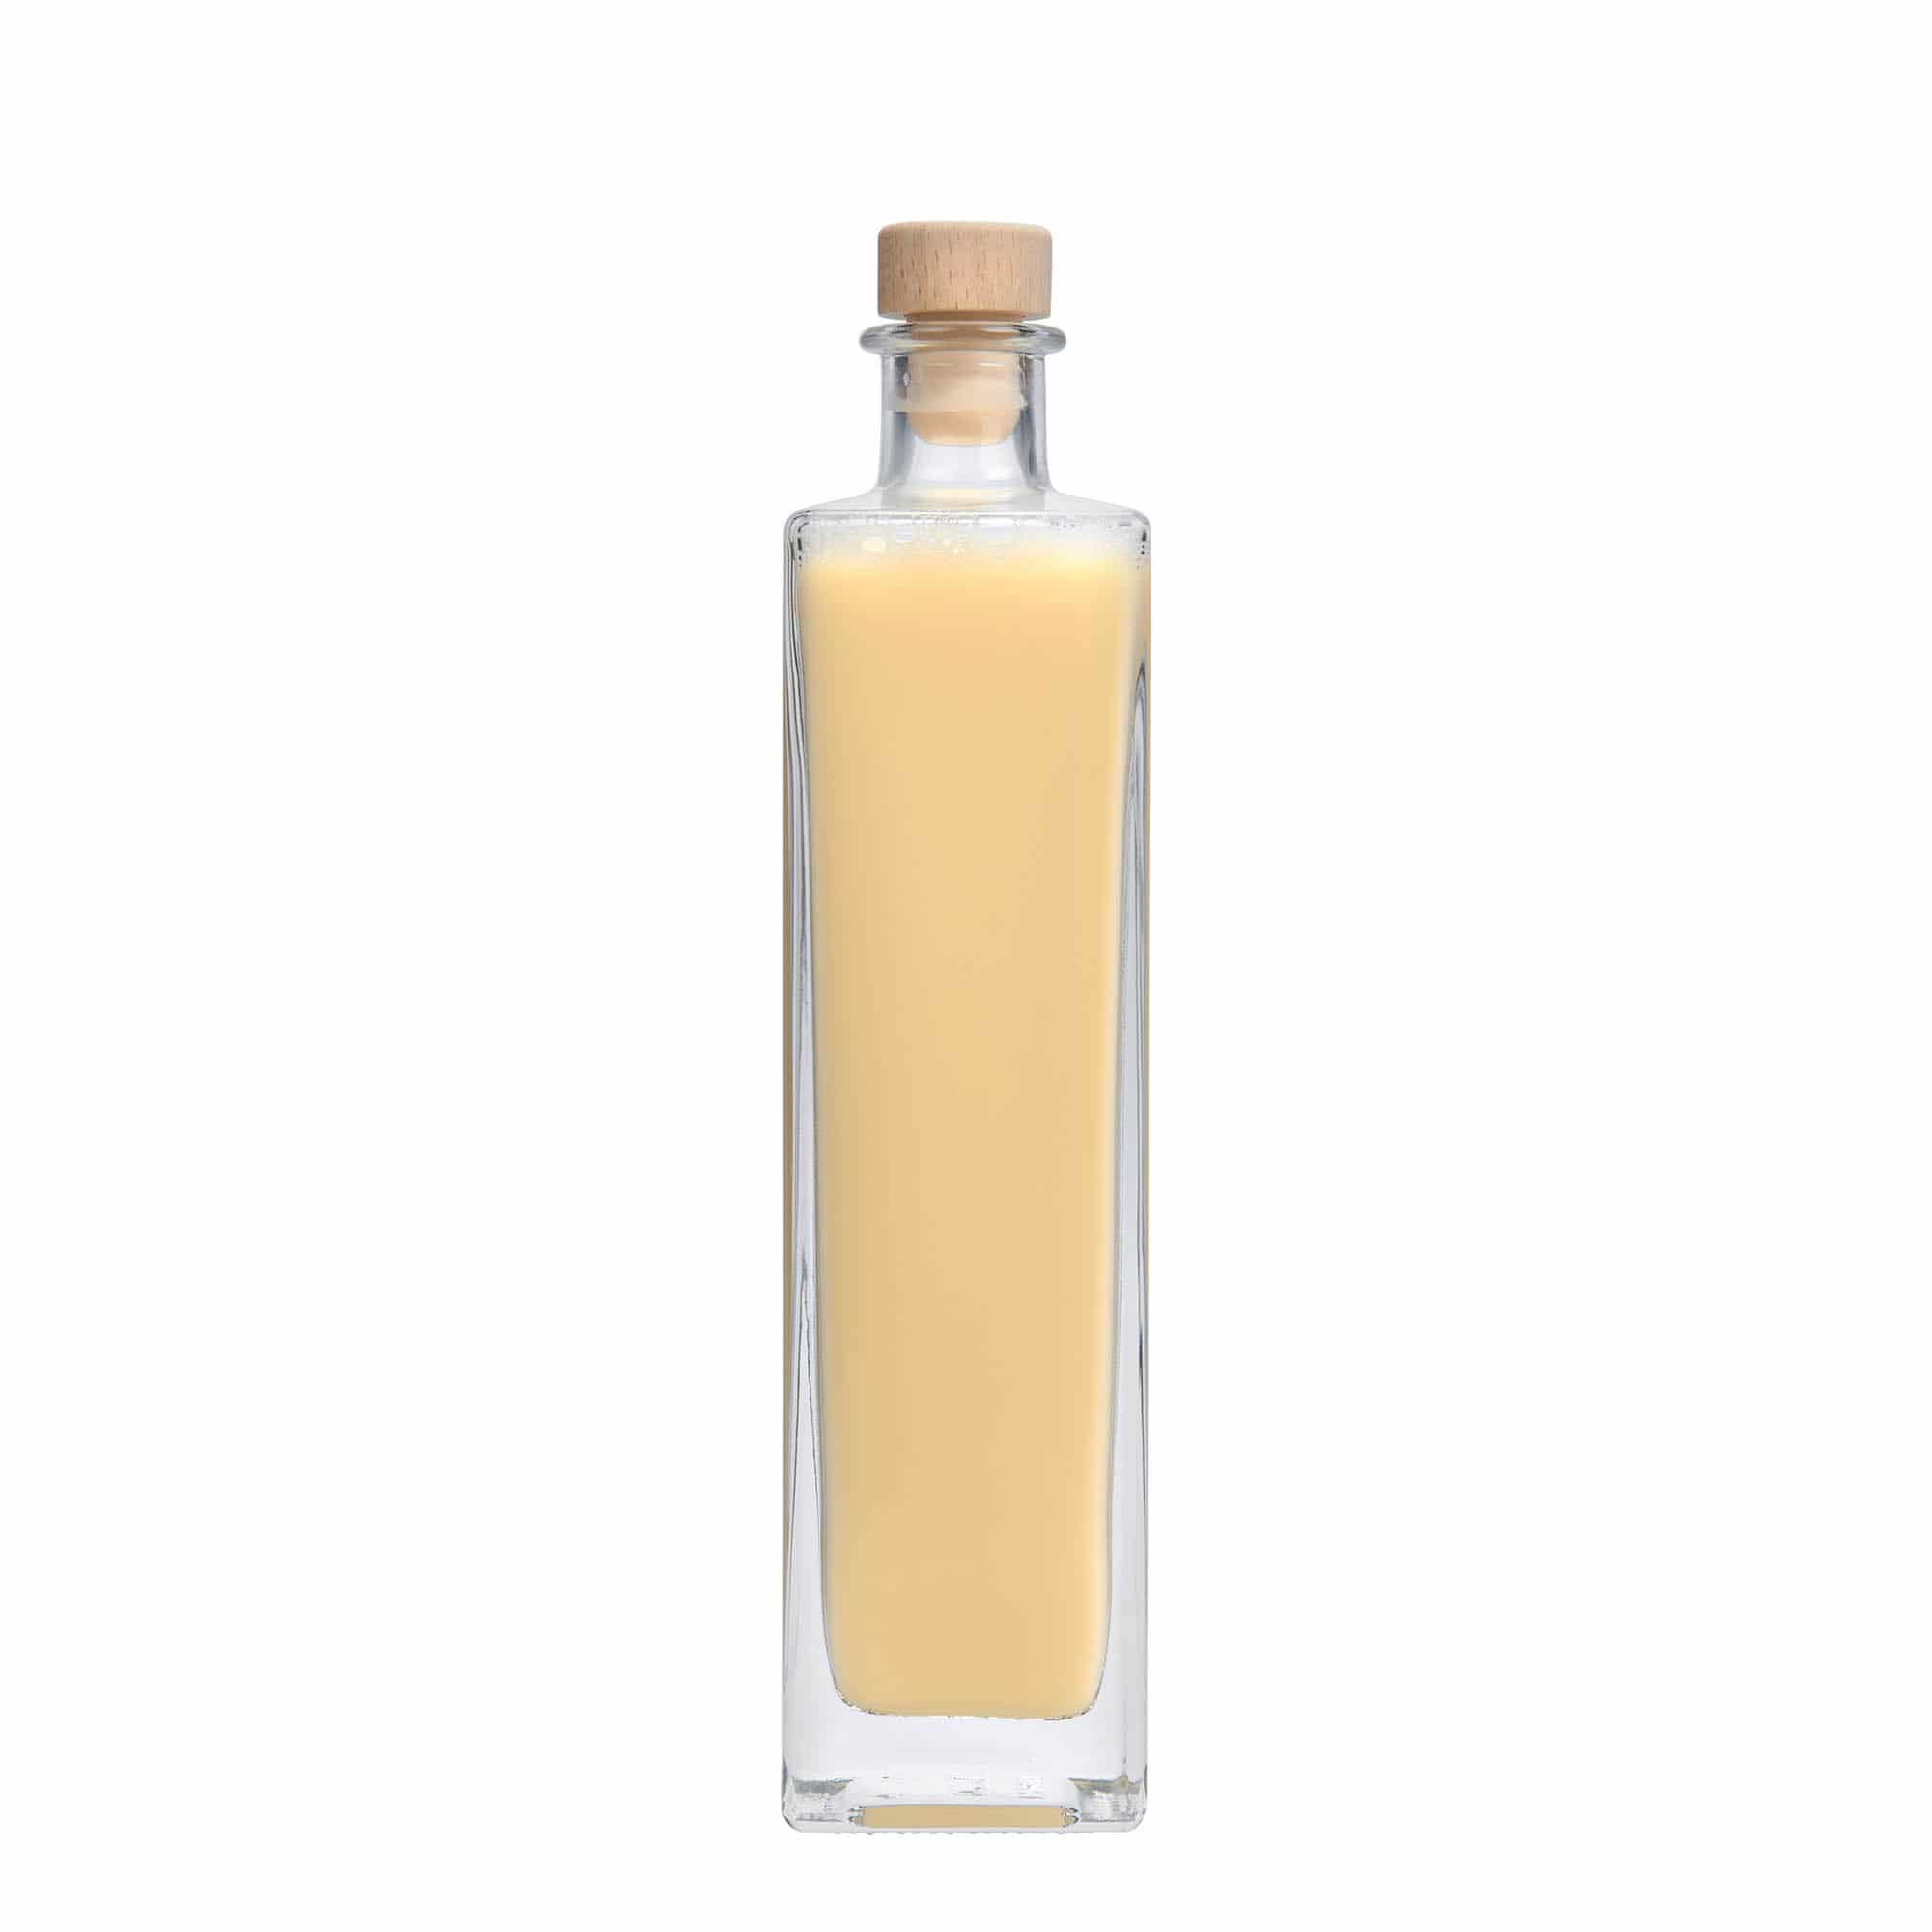 Glazen fles 'Rafaello', 500 ml, vierkant, monding: kurk